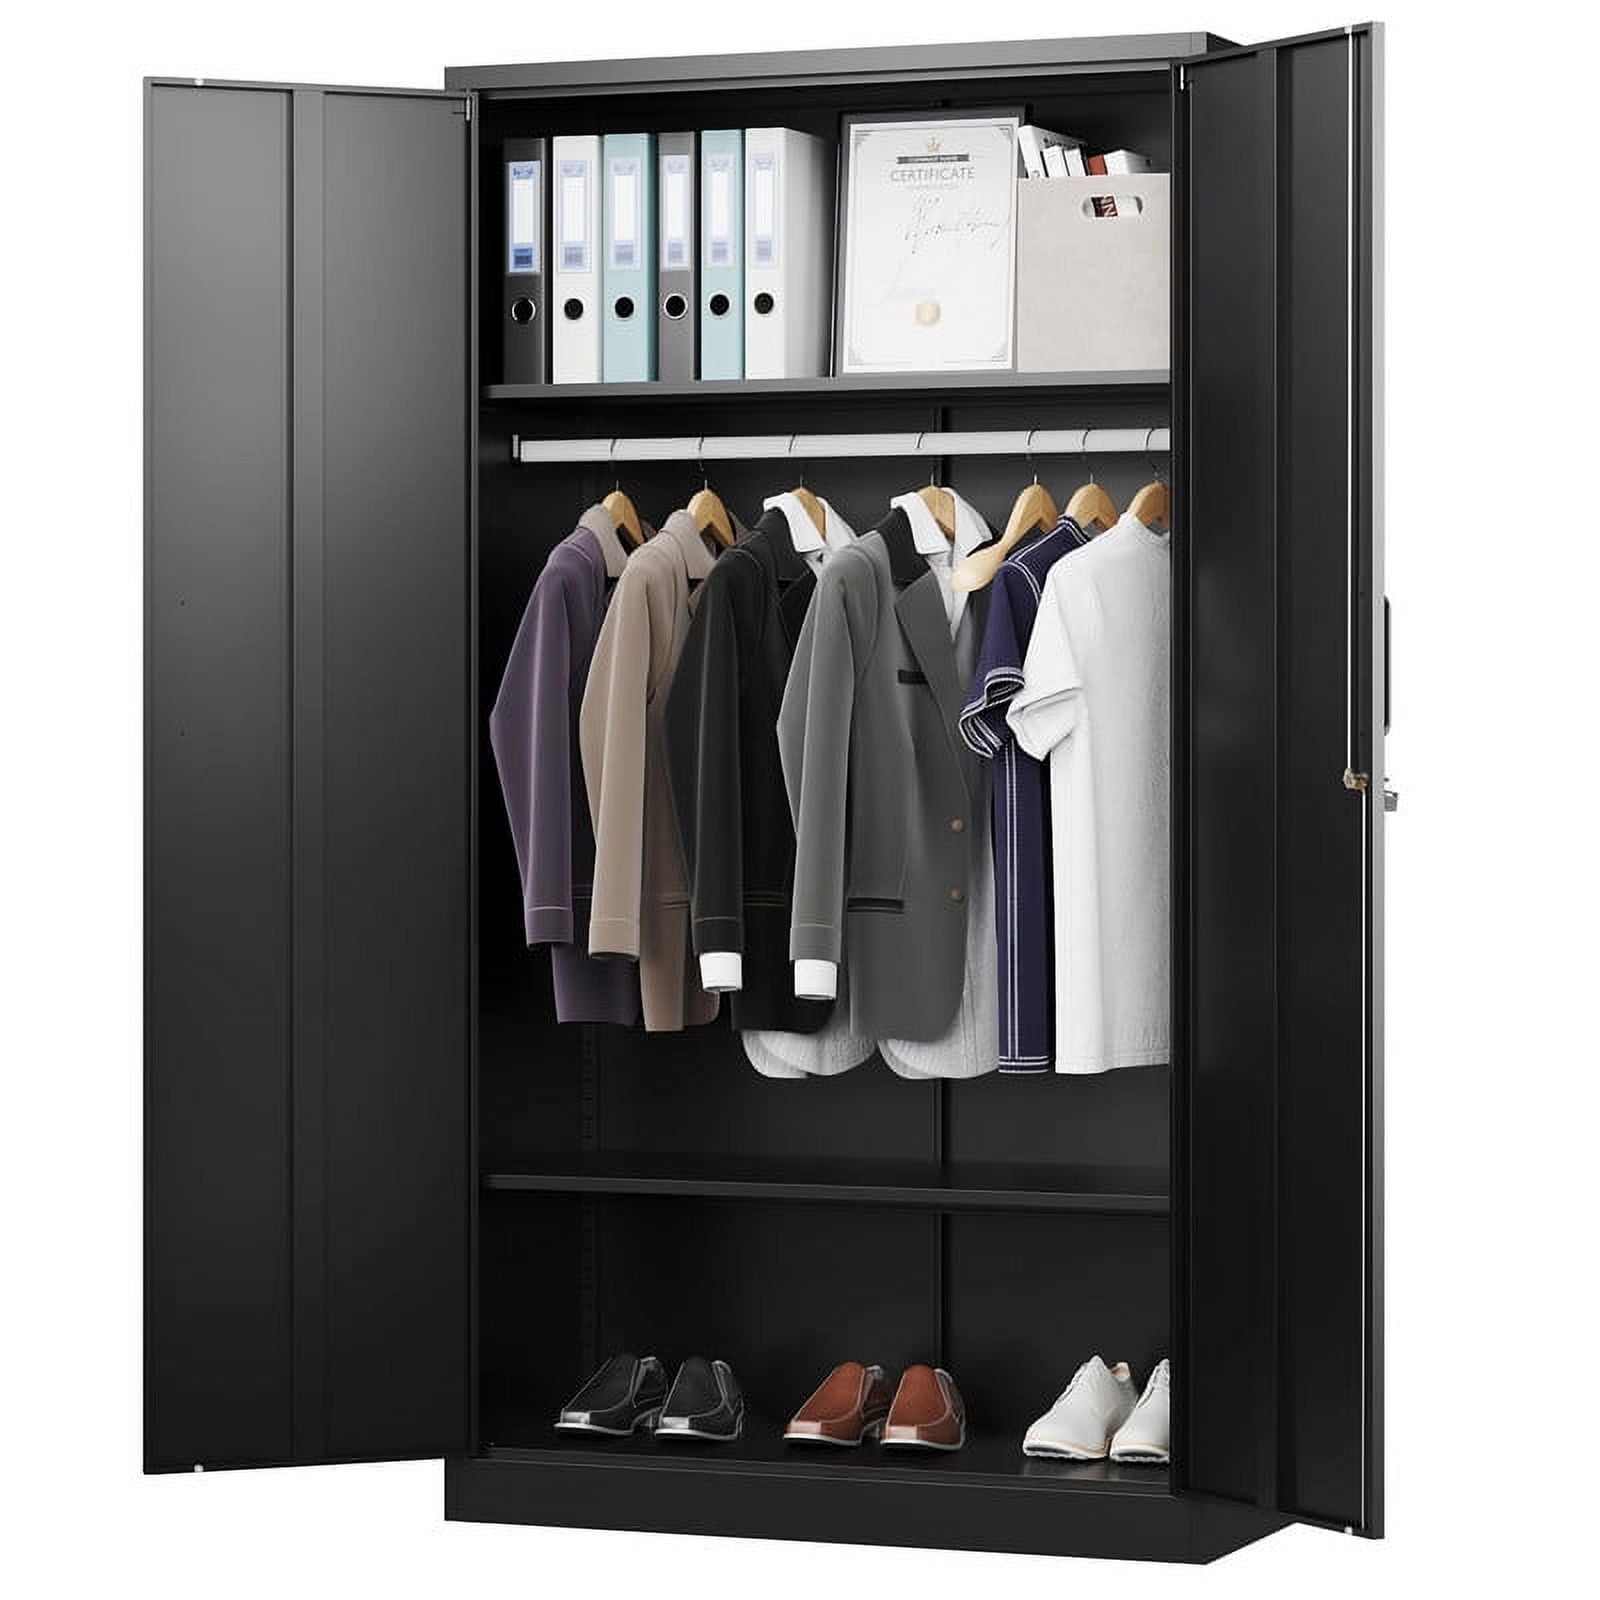 Fesbos Metal Wardrobe Cabinets with Lock,Clothing Locker 72